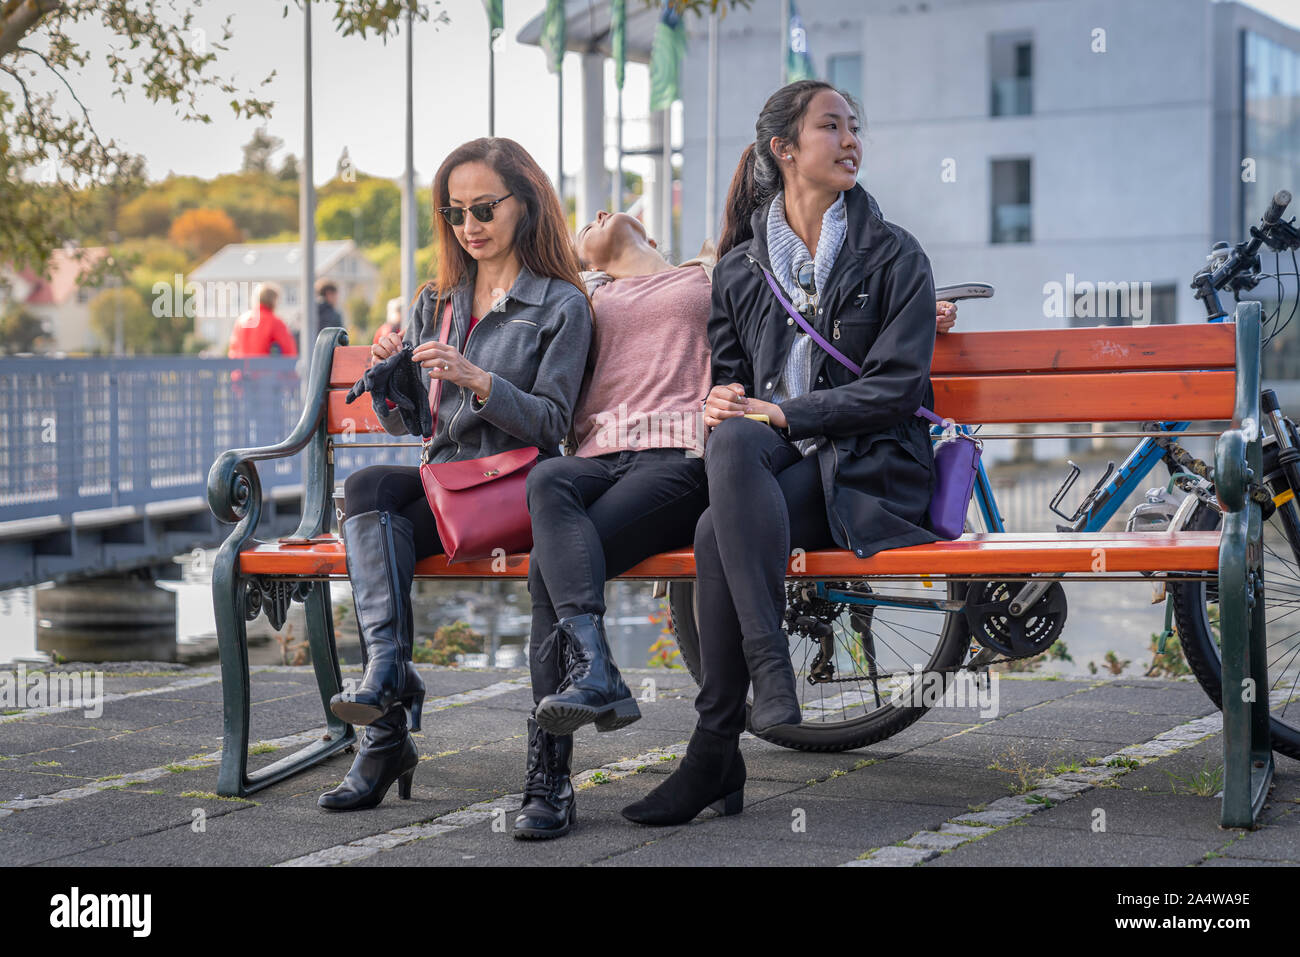 Freundinnen auf einer Bank, Menningarnott Feier, Reykjavik, Island Stockfoto